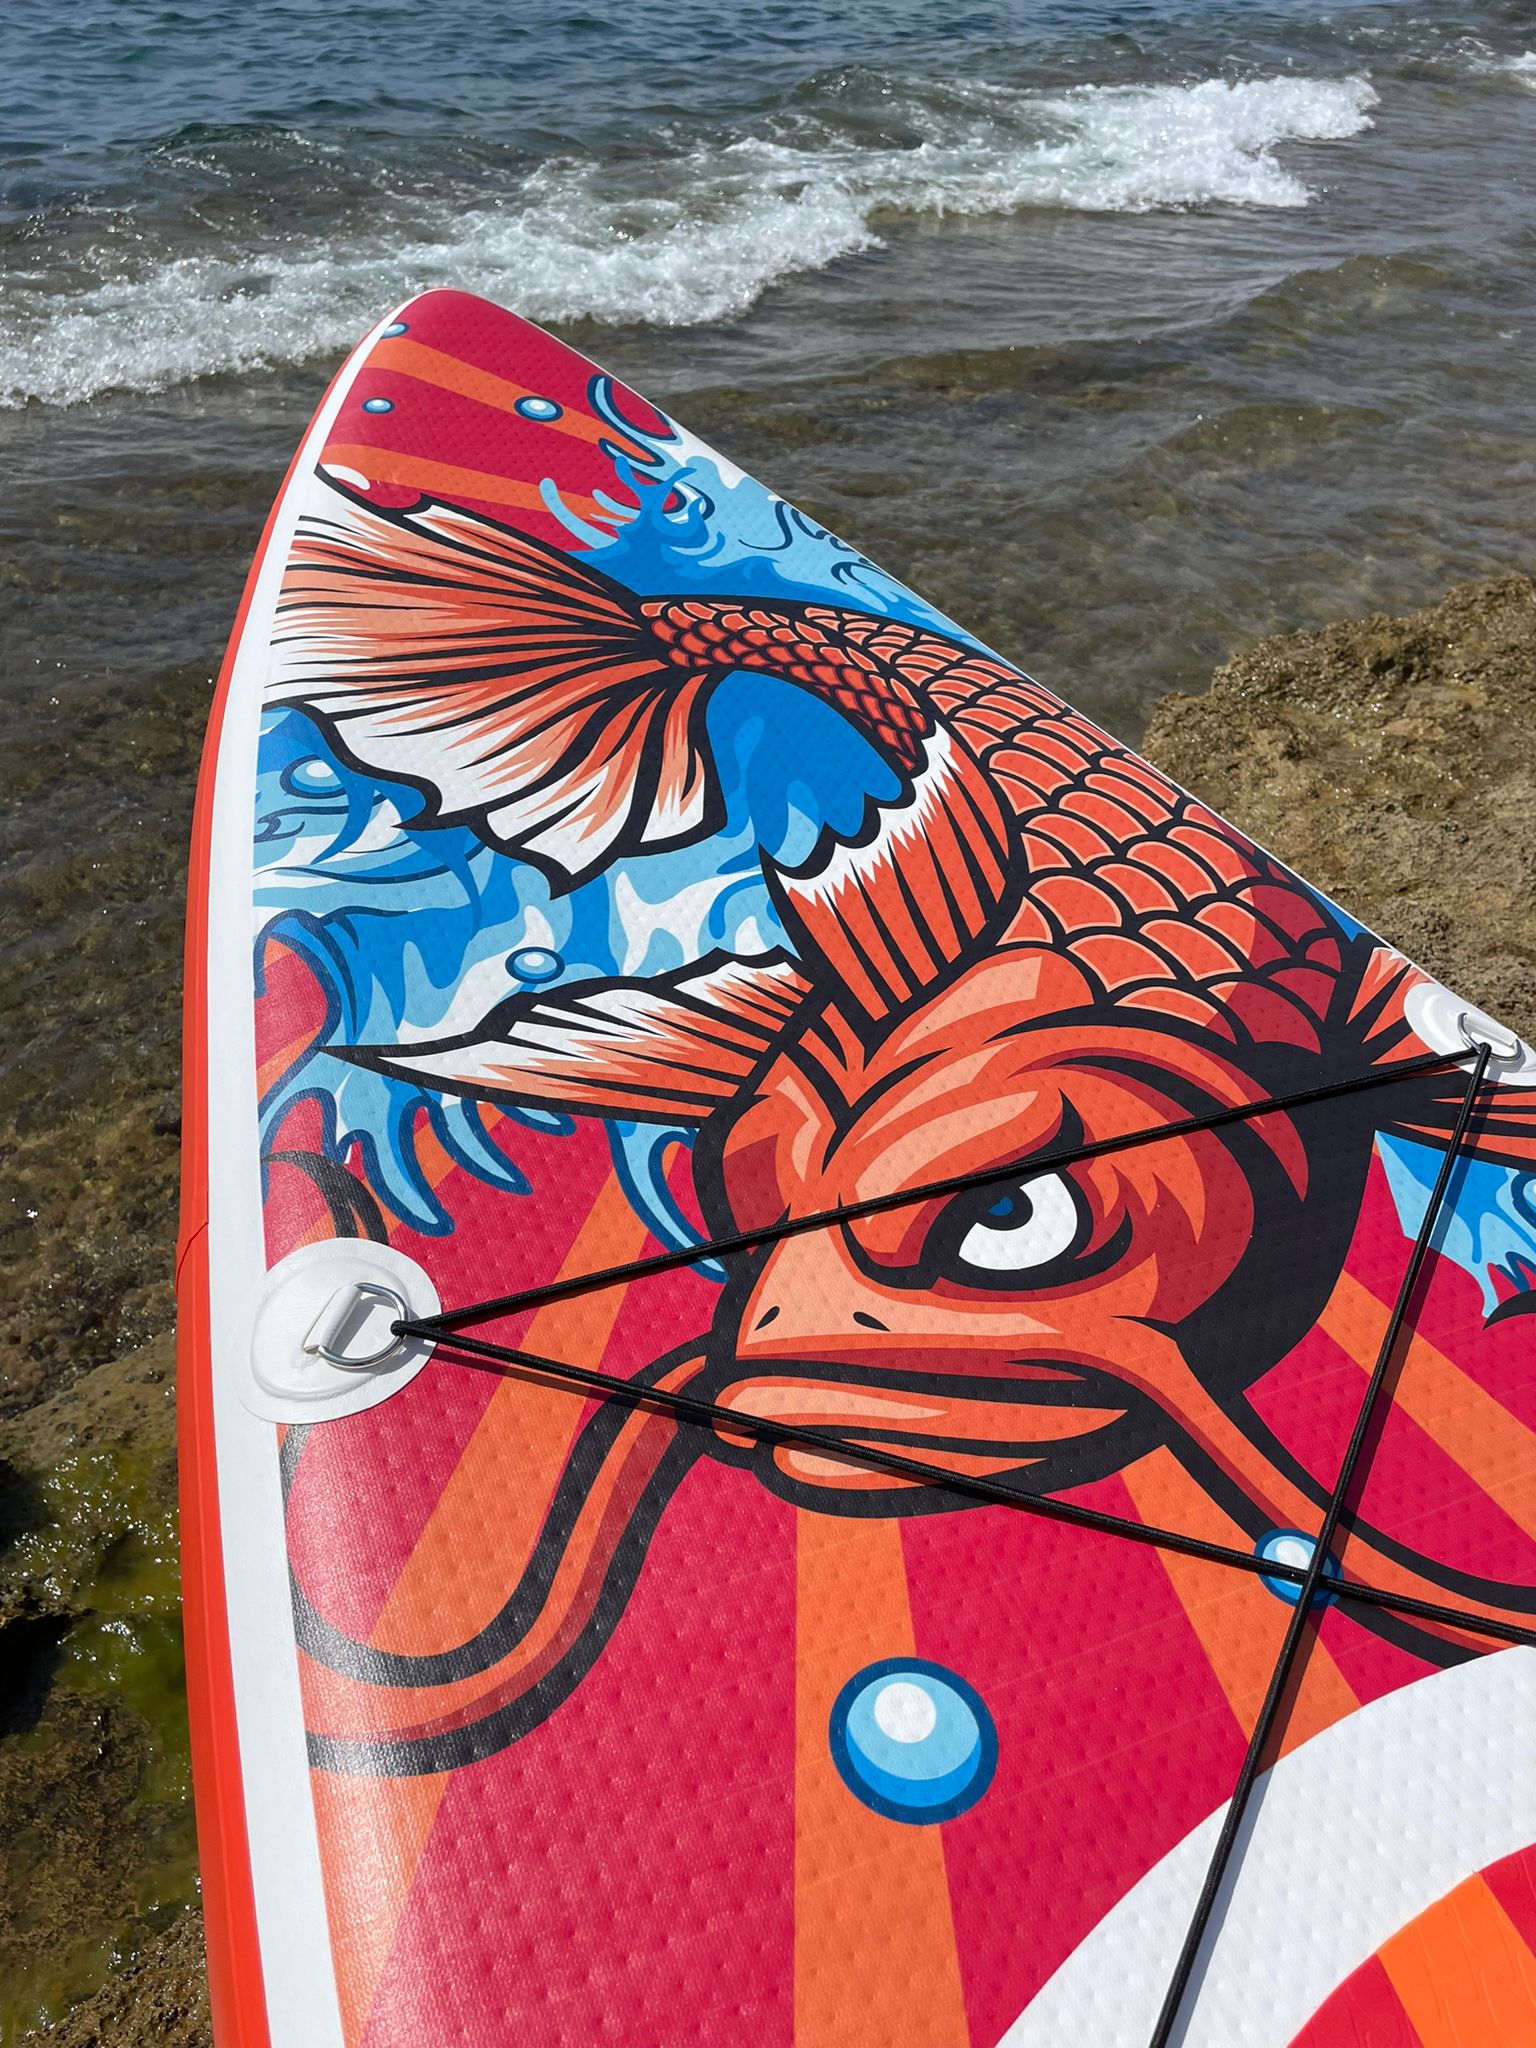 KOI venta de tablas de paddle Surf hinchables